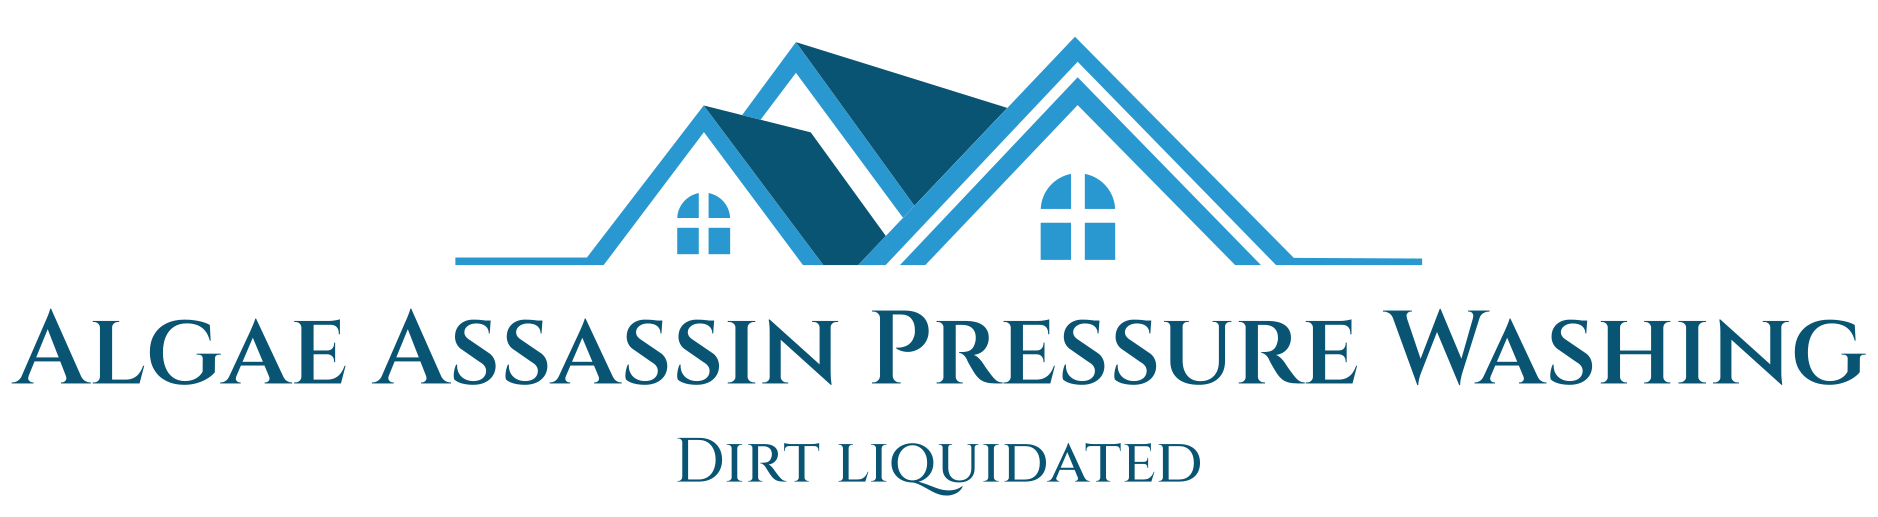 Algae Assassin Pressure Washing Logo